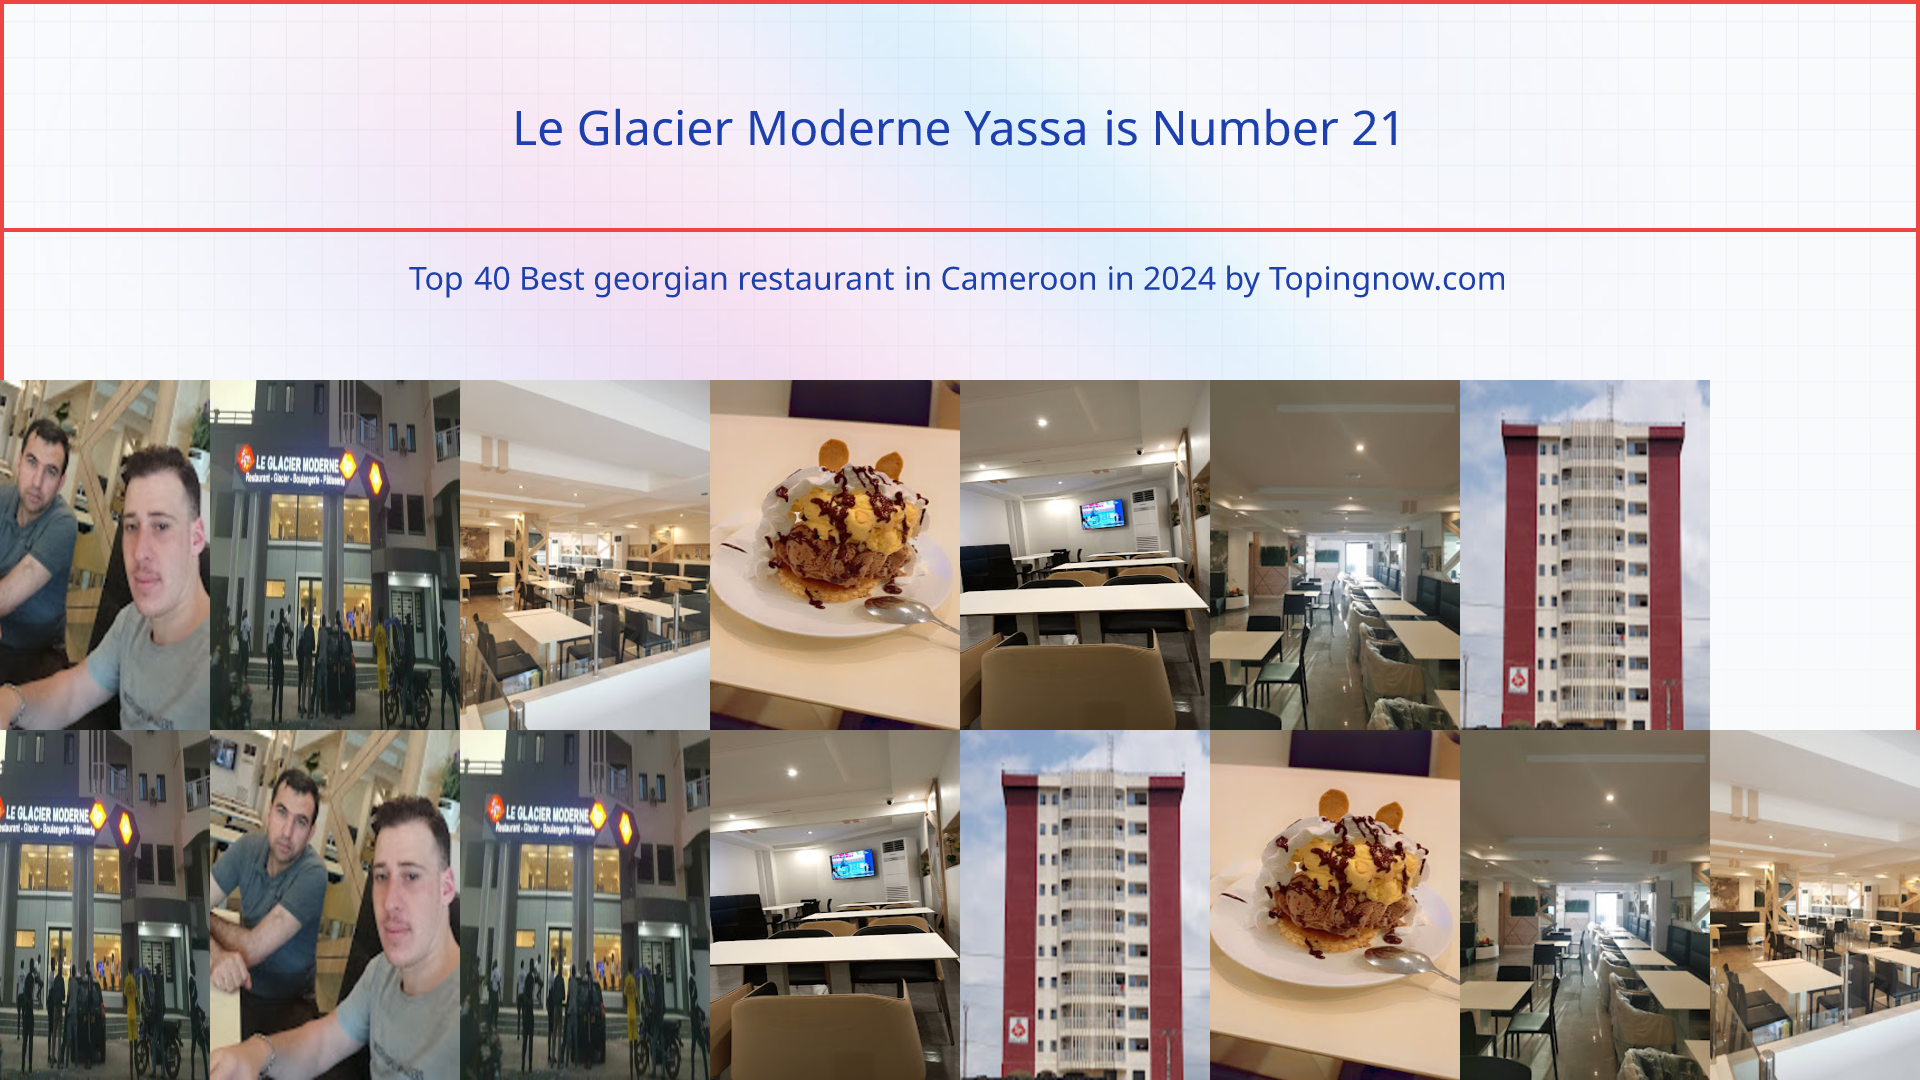 Le Glacier Moderne Yassa: Top 40 Best georgian restaurant in Cameroon in 2024